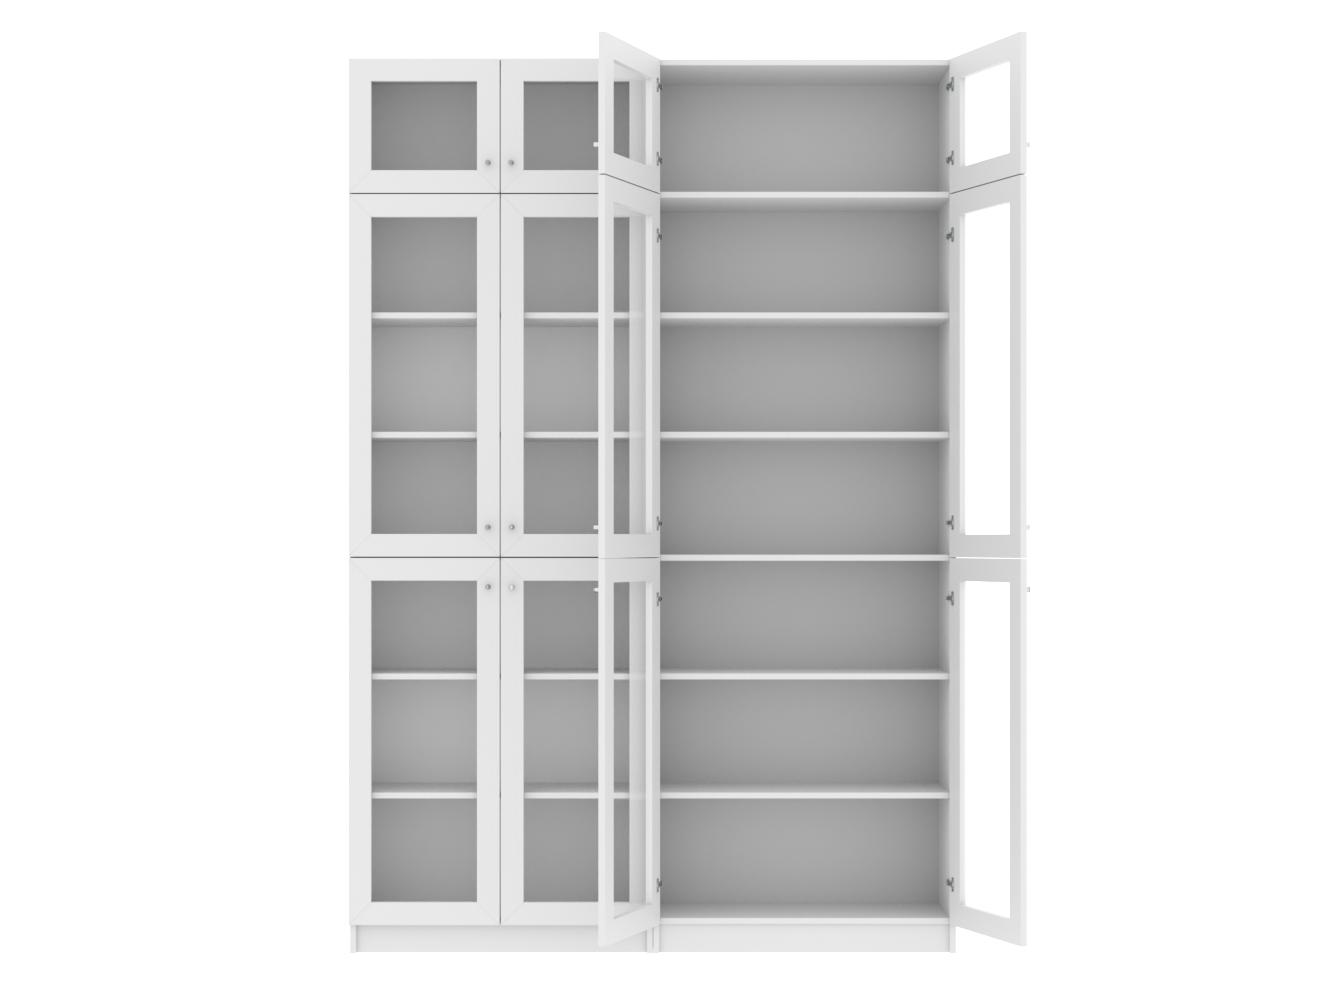 Книжный шкаф Билли 353 white ИКЕА (IKEA) изображение товара